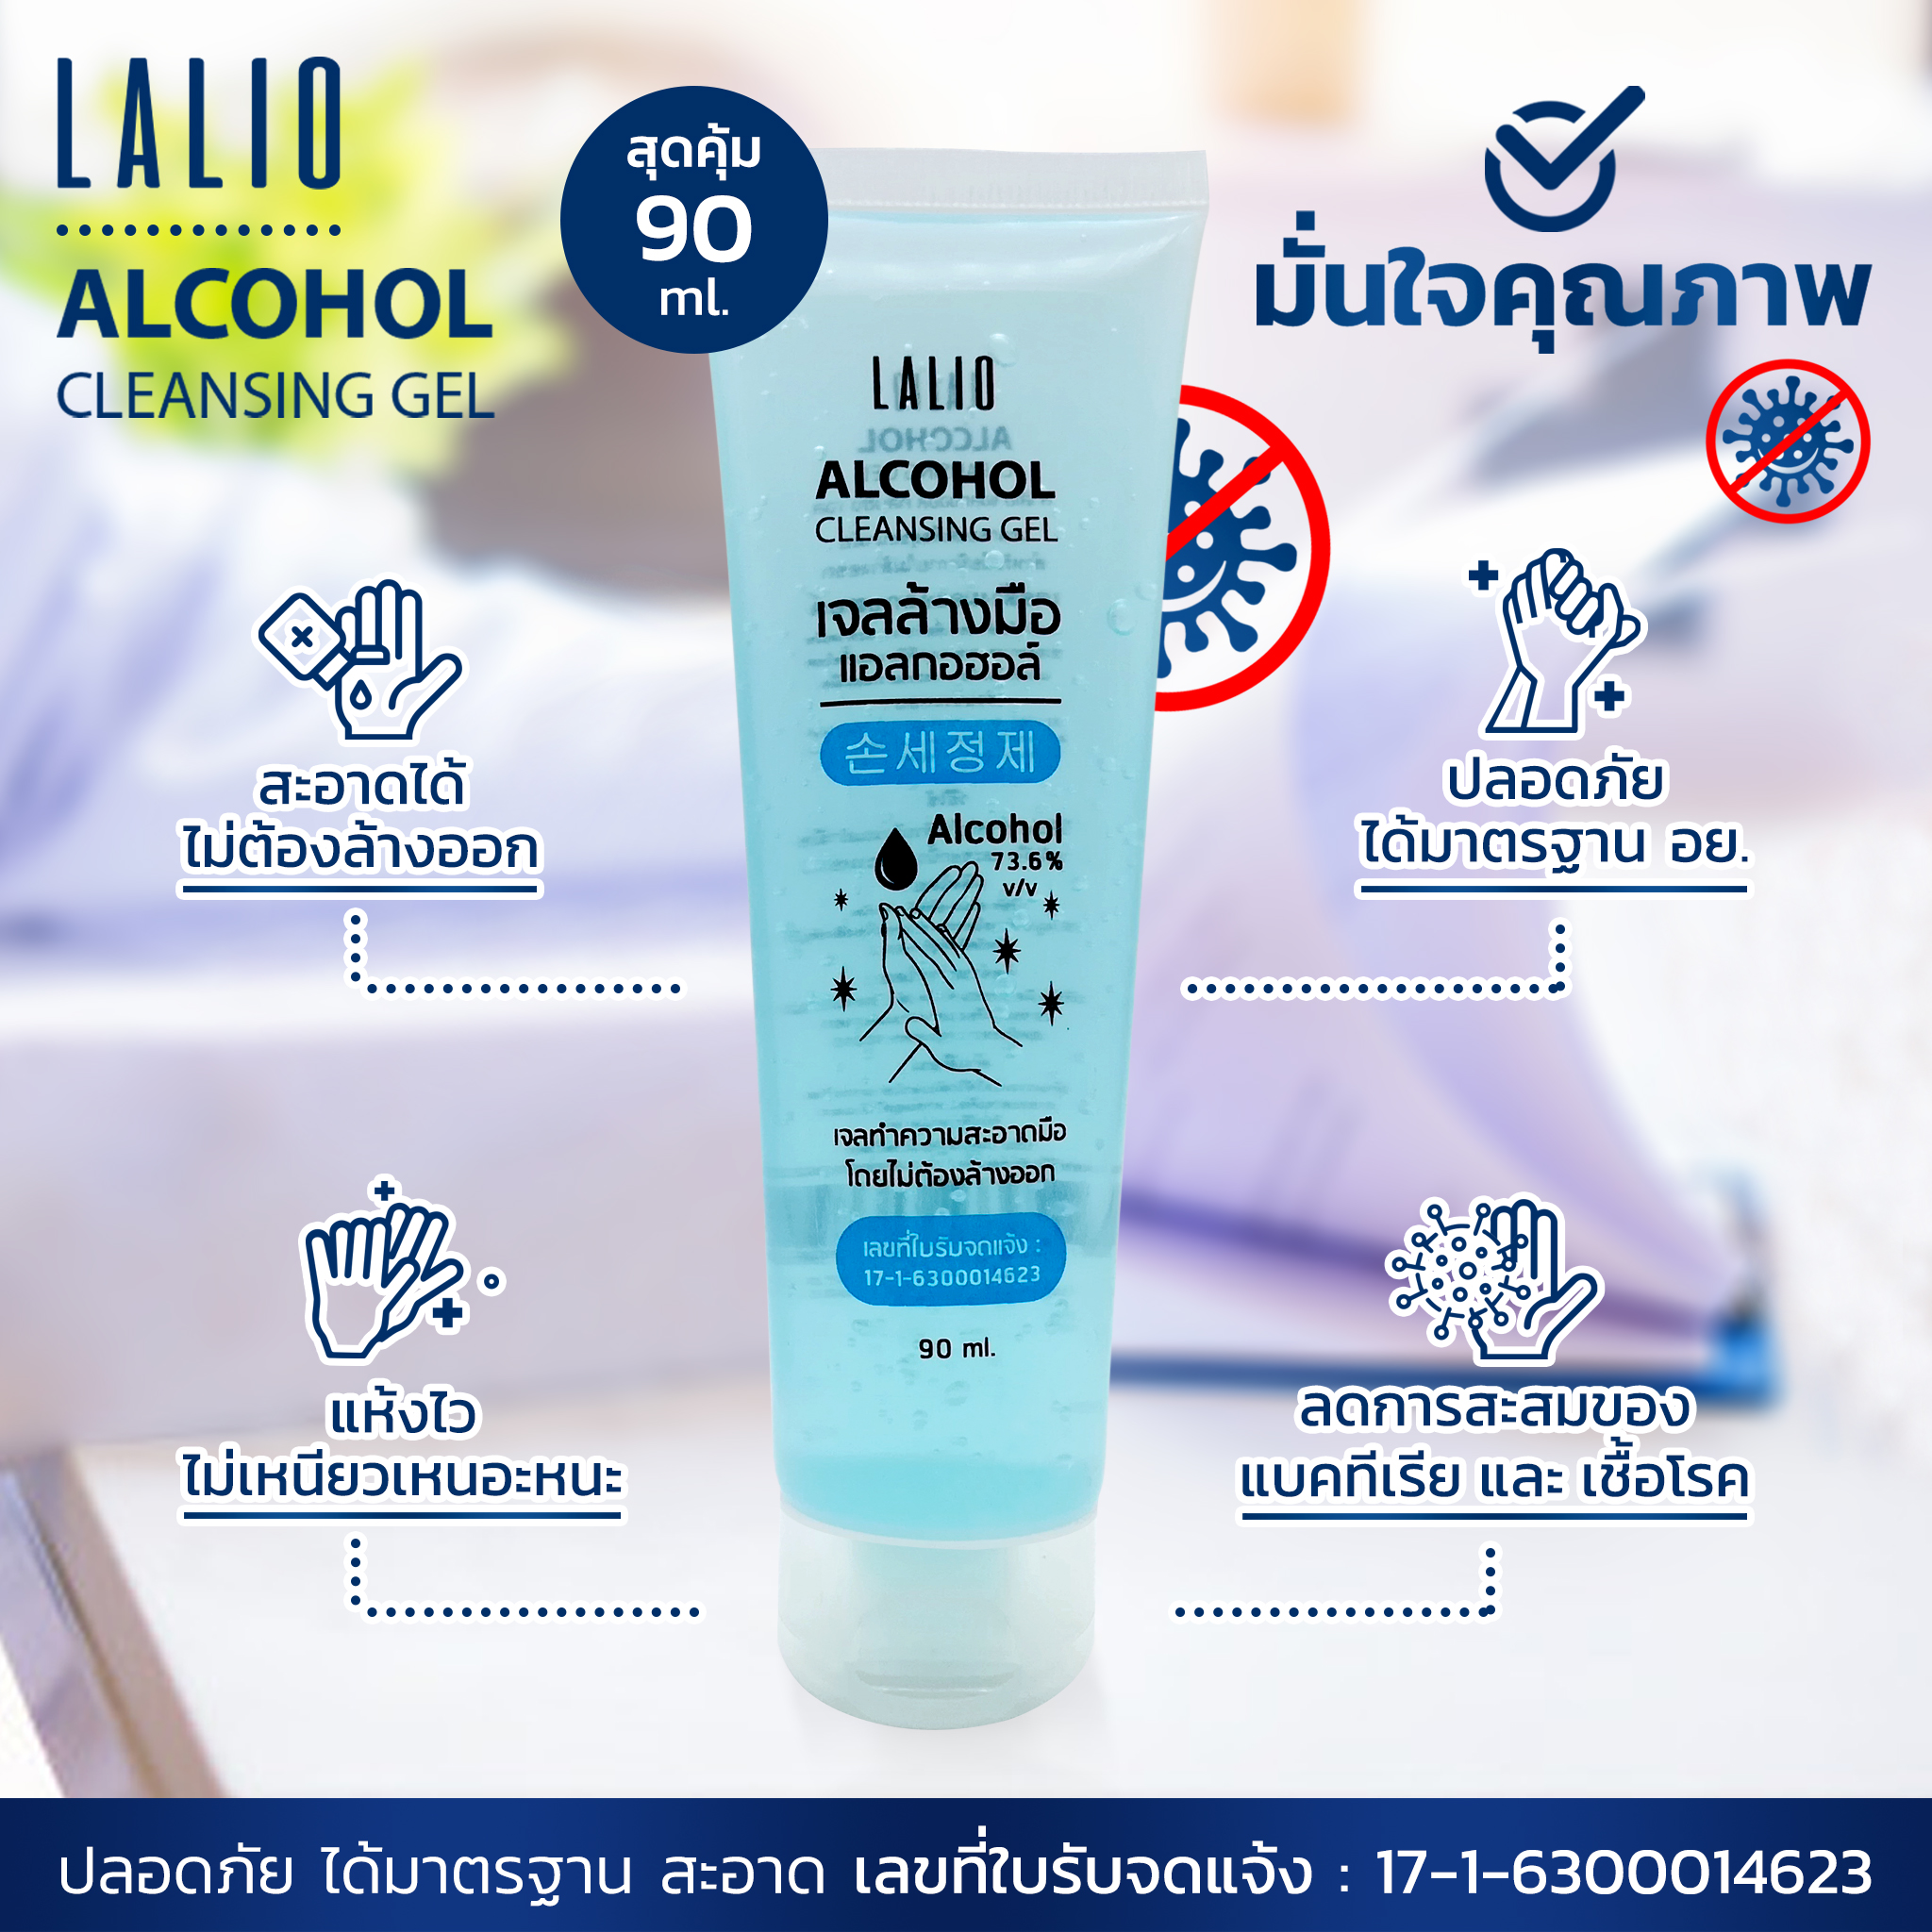 Lalio,Lalio Alcohol Cleansing Gel 90ml ,ลาลิโอ ,ลาลิโอ แอลกอฮอล์ คลีนซิ่ง เจล ,เจลล้างมือแอลกอฮอล์, เจลล้างมือพกพา,เจลล้างมือยี่ห้อไหนดี